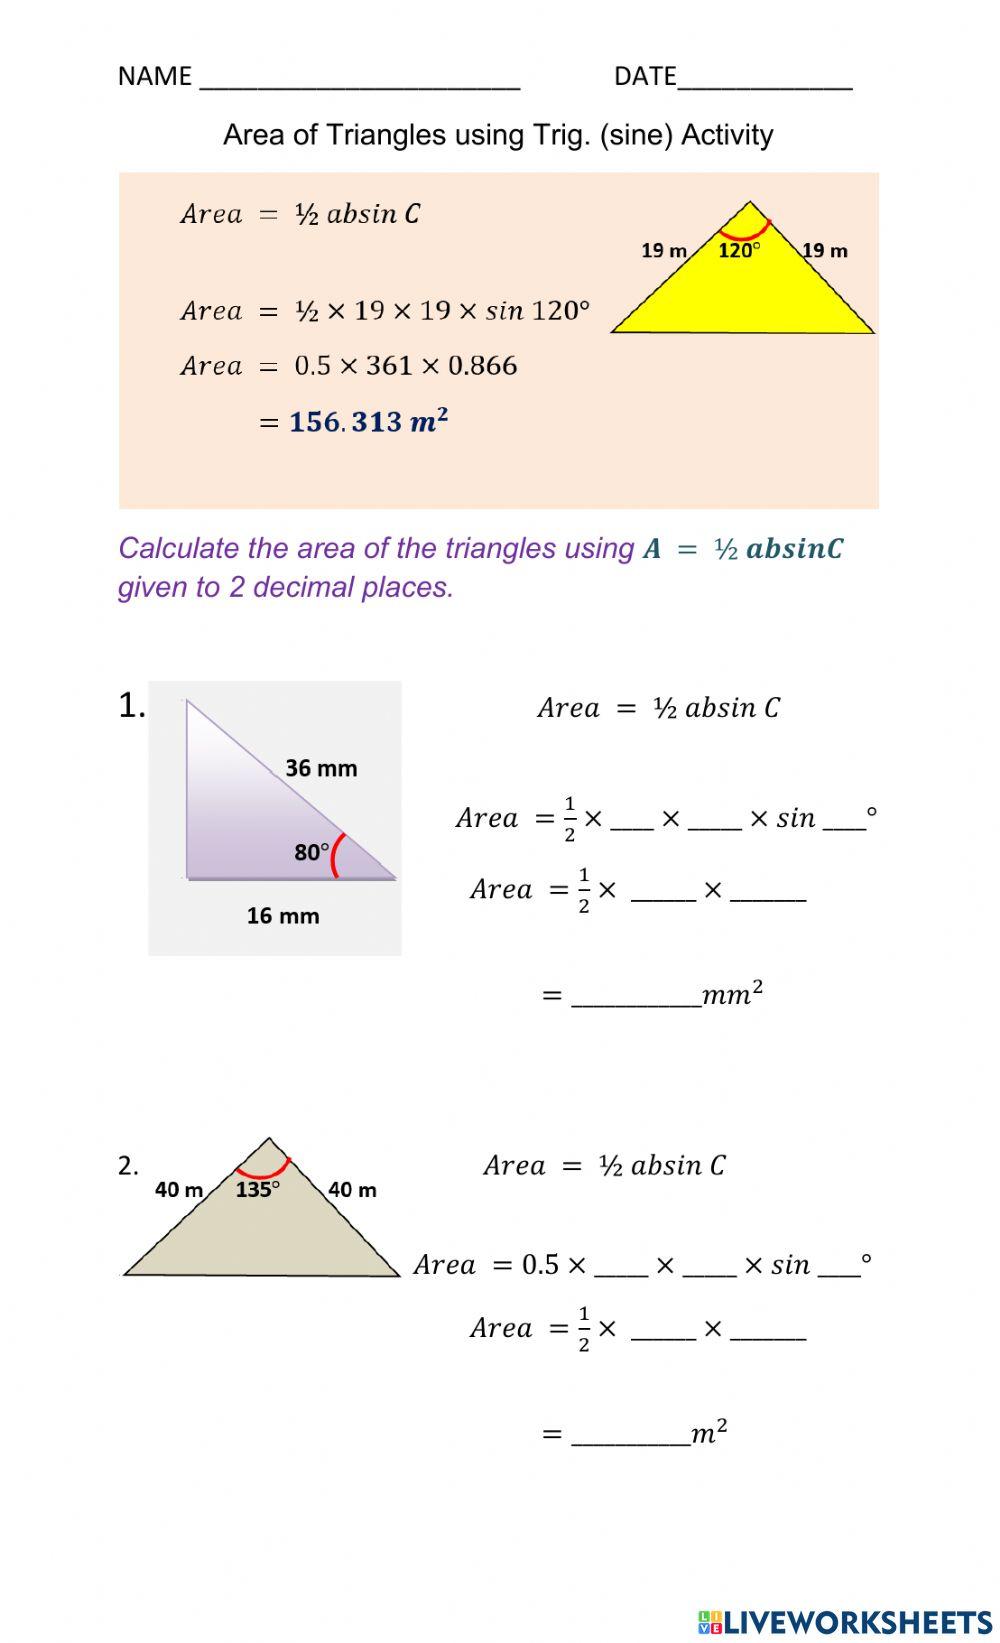 Area of Triangles Trig (Sine method)